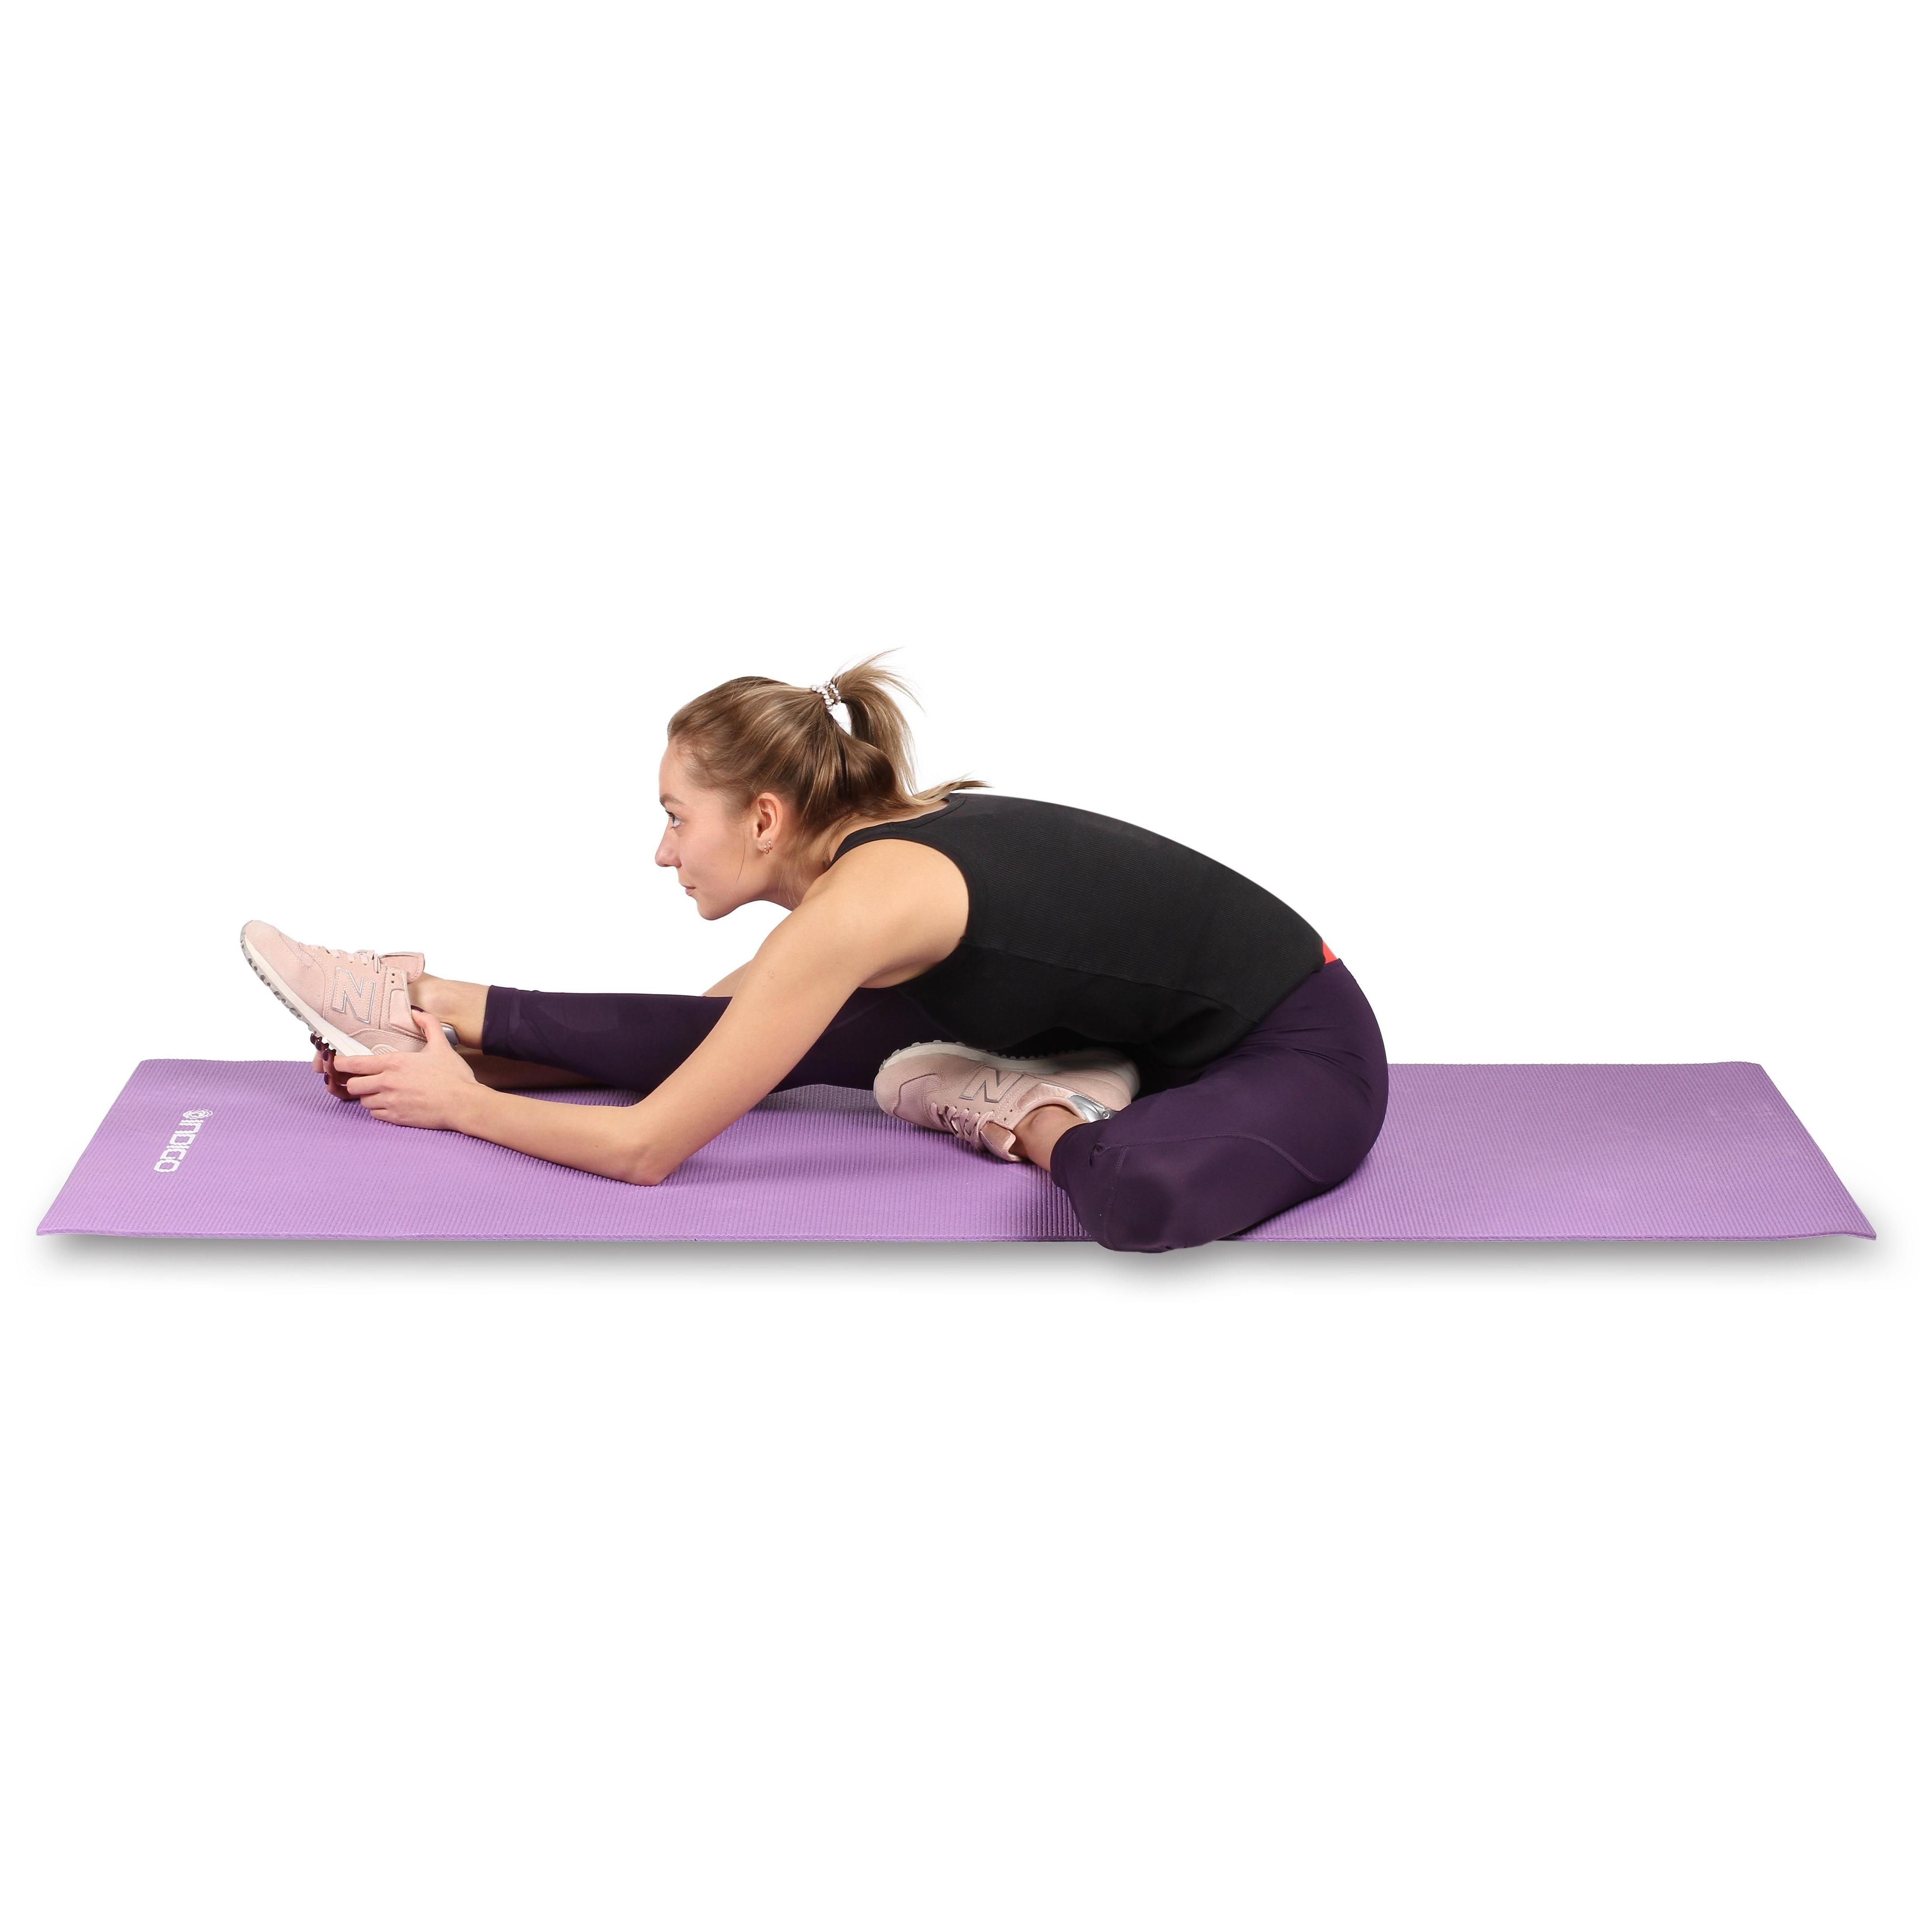 Esterilla de Yoga y Fitness PVC INDIGO 173 * 61 * 0,3 cm Violeta